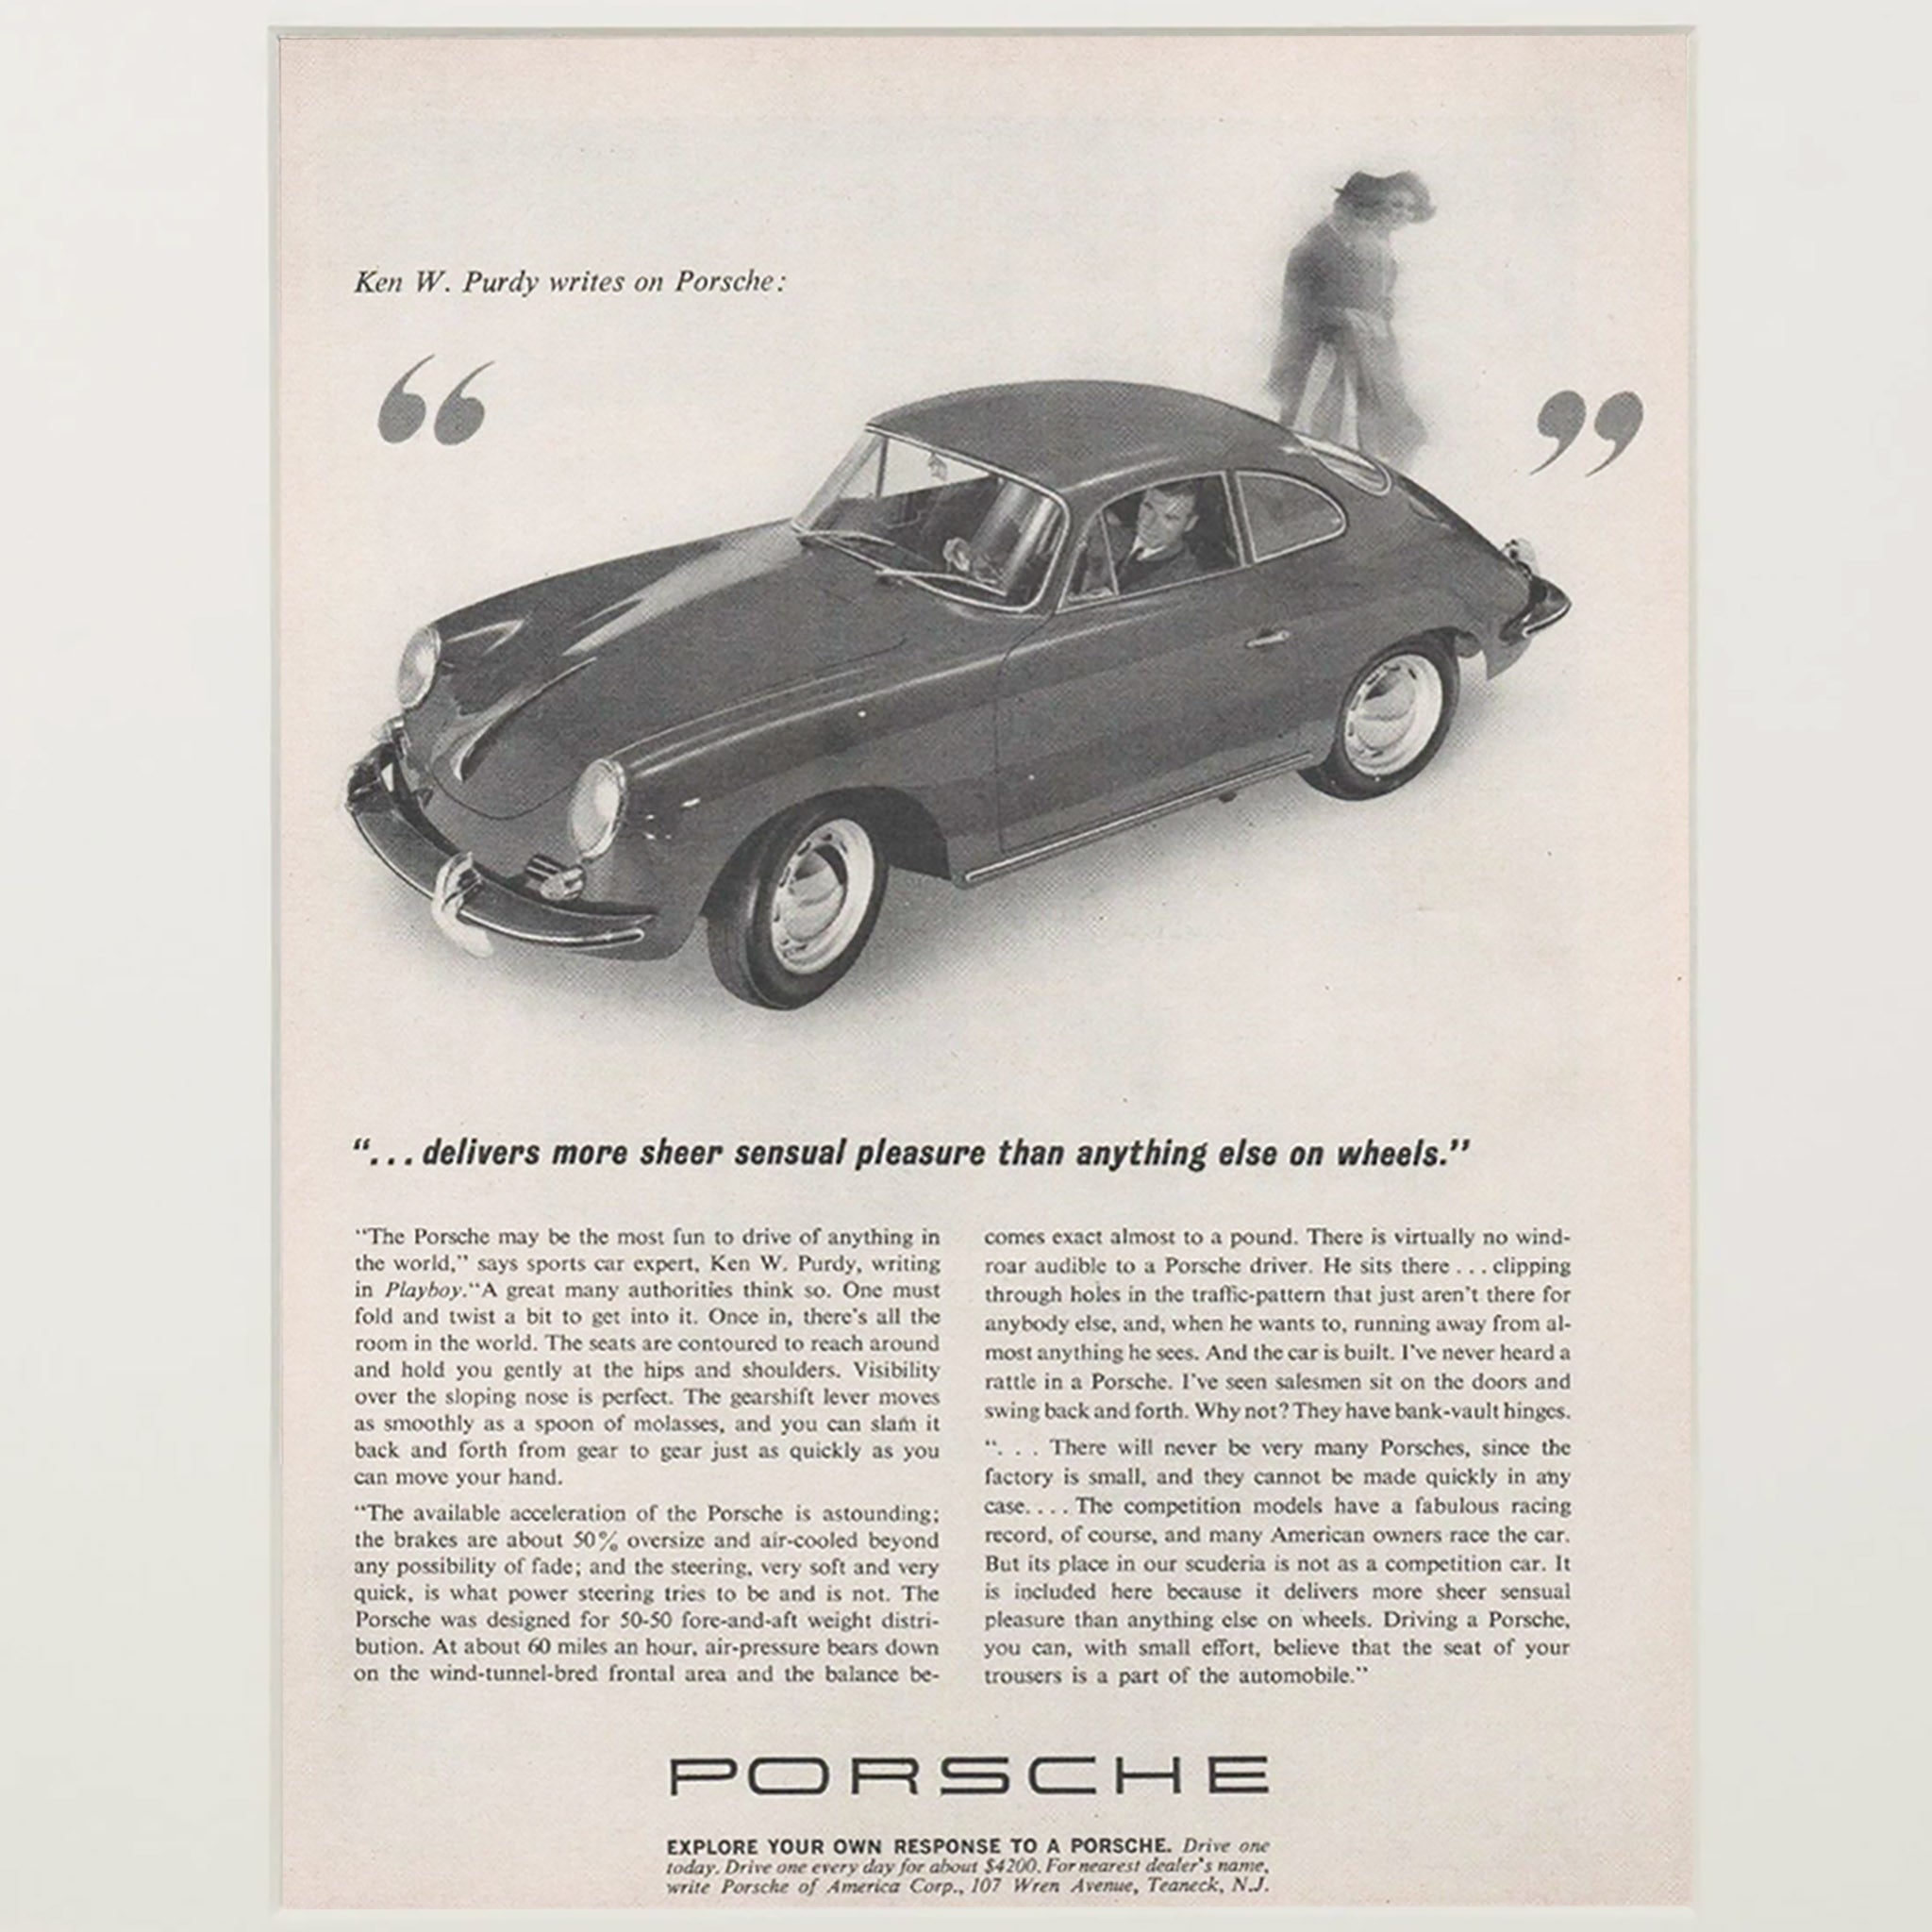 Framed Vintage Porsche 1963 Advertisement